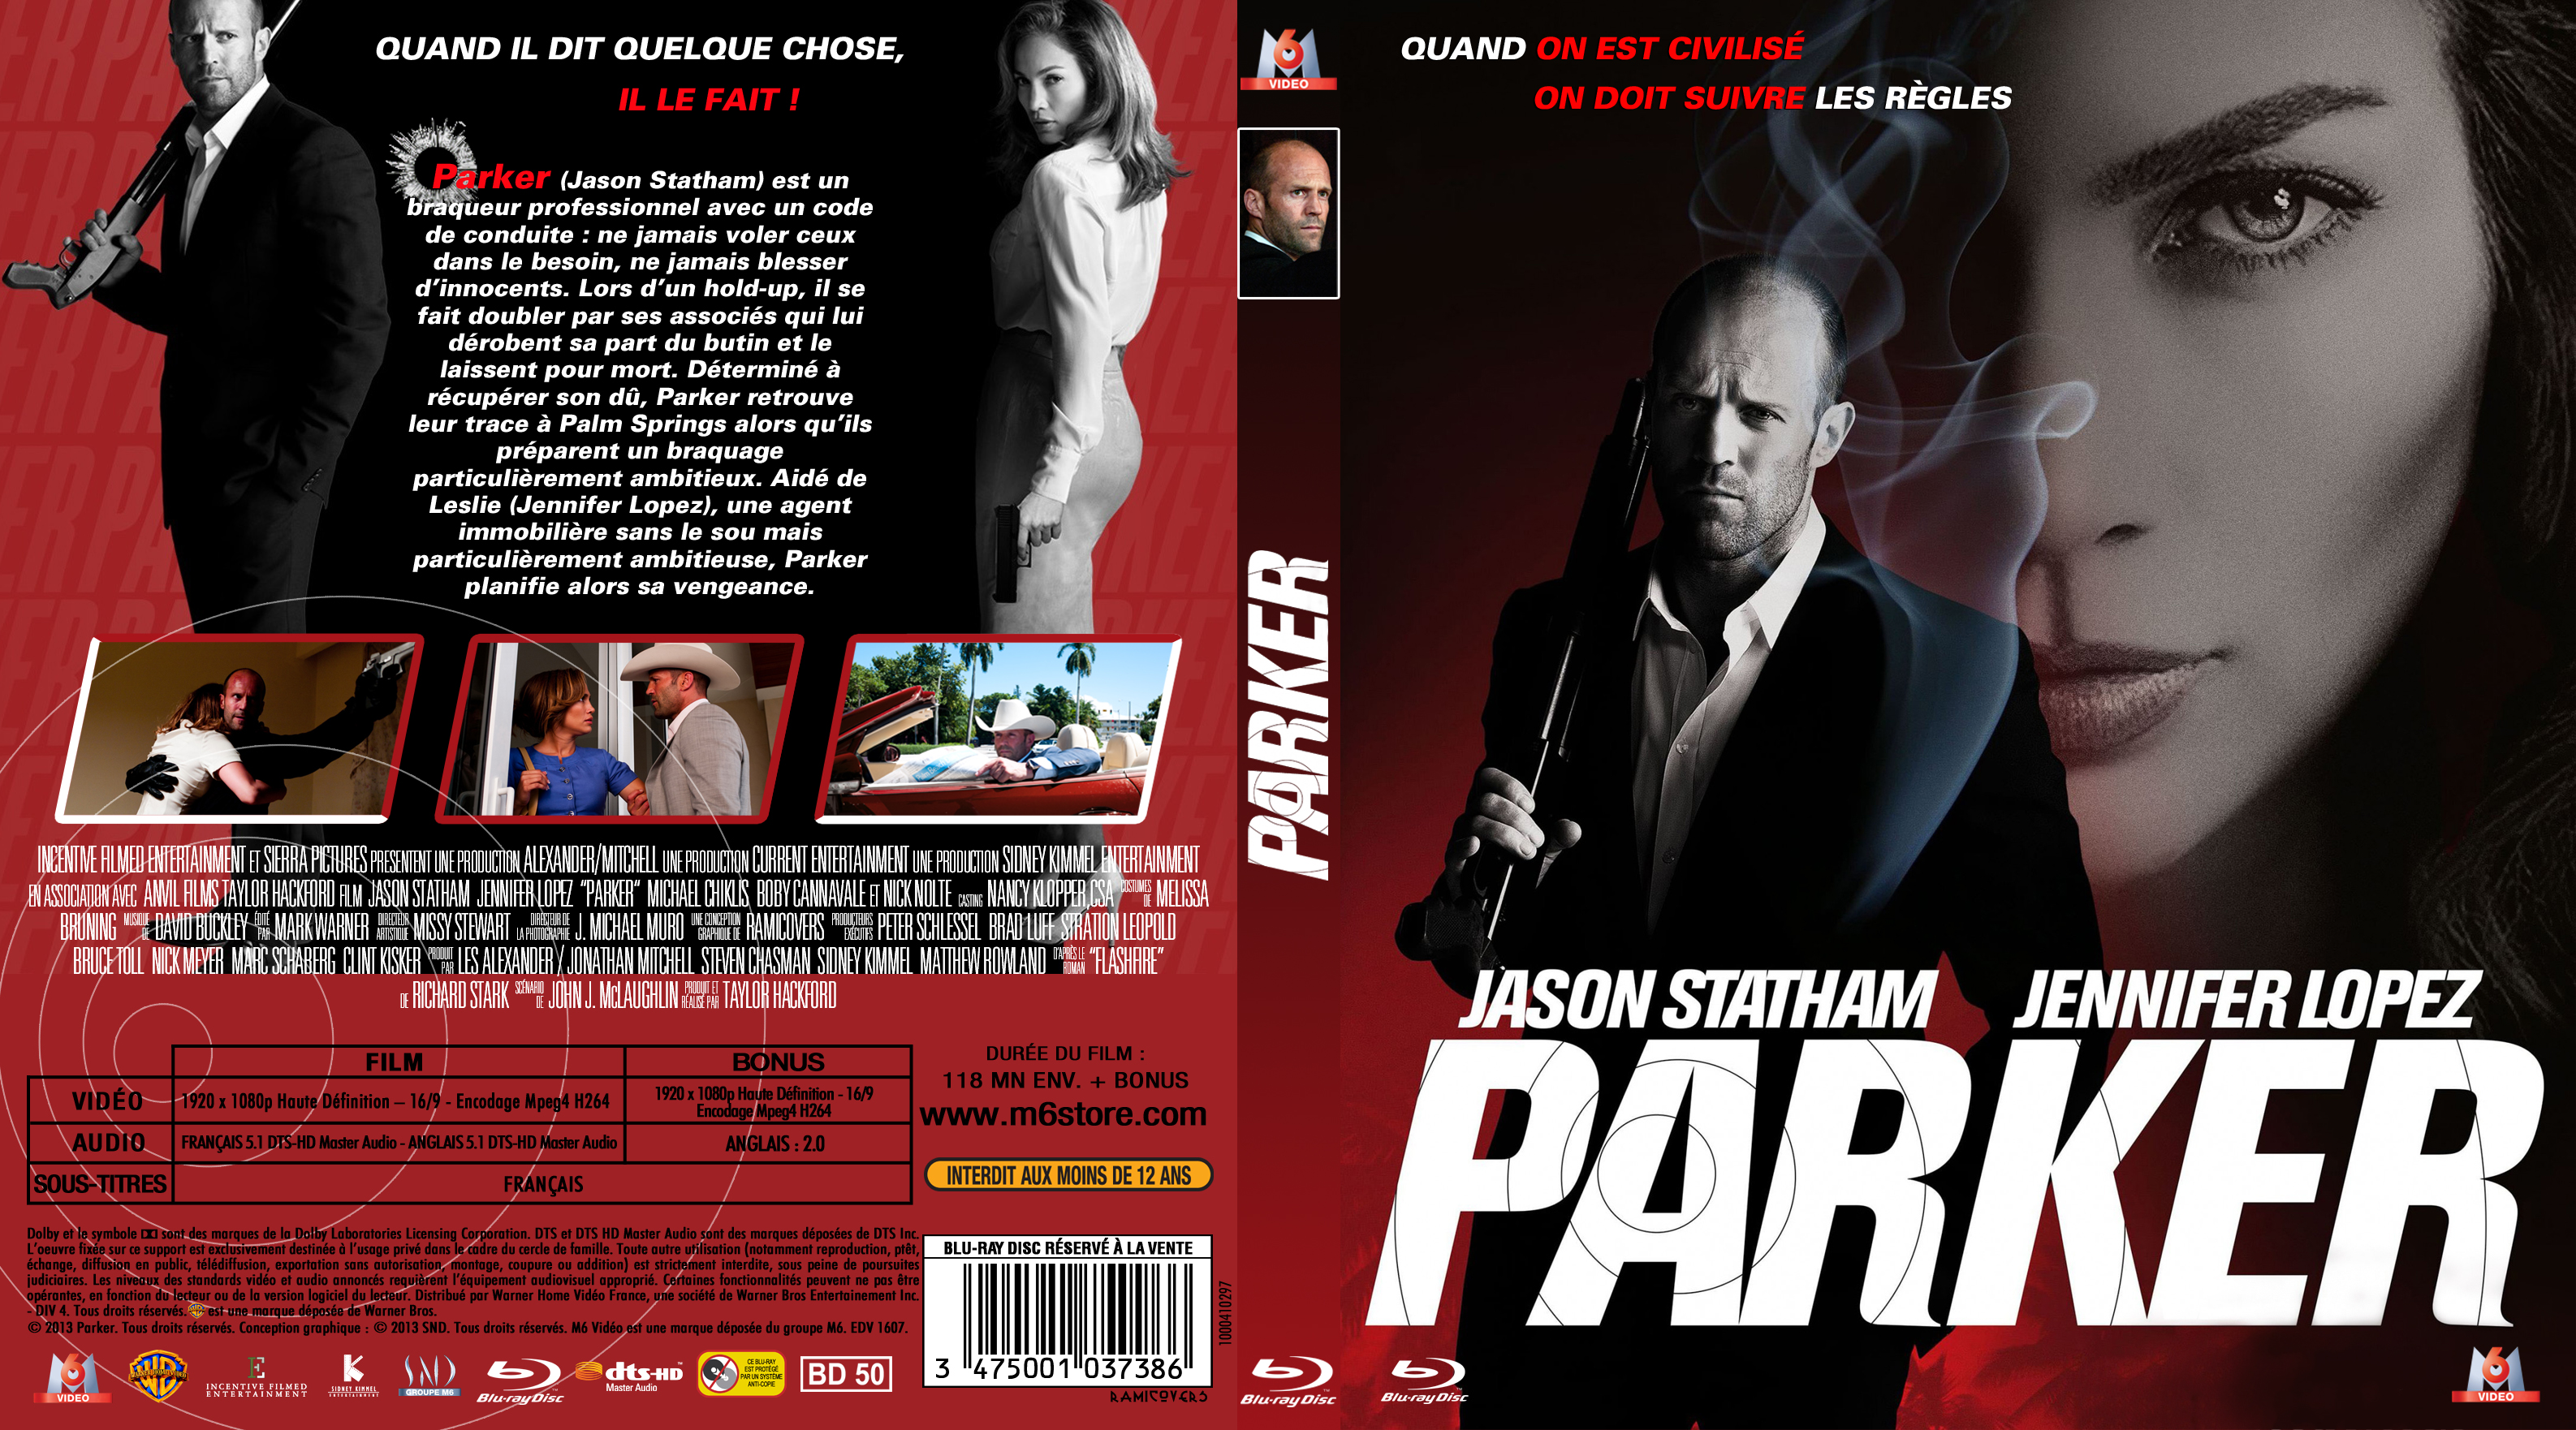 Jaquette DVD Parker custom (BLU-RAY) v2